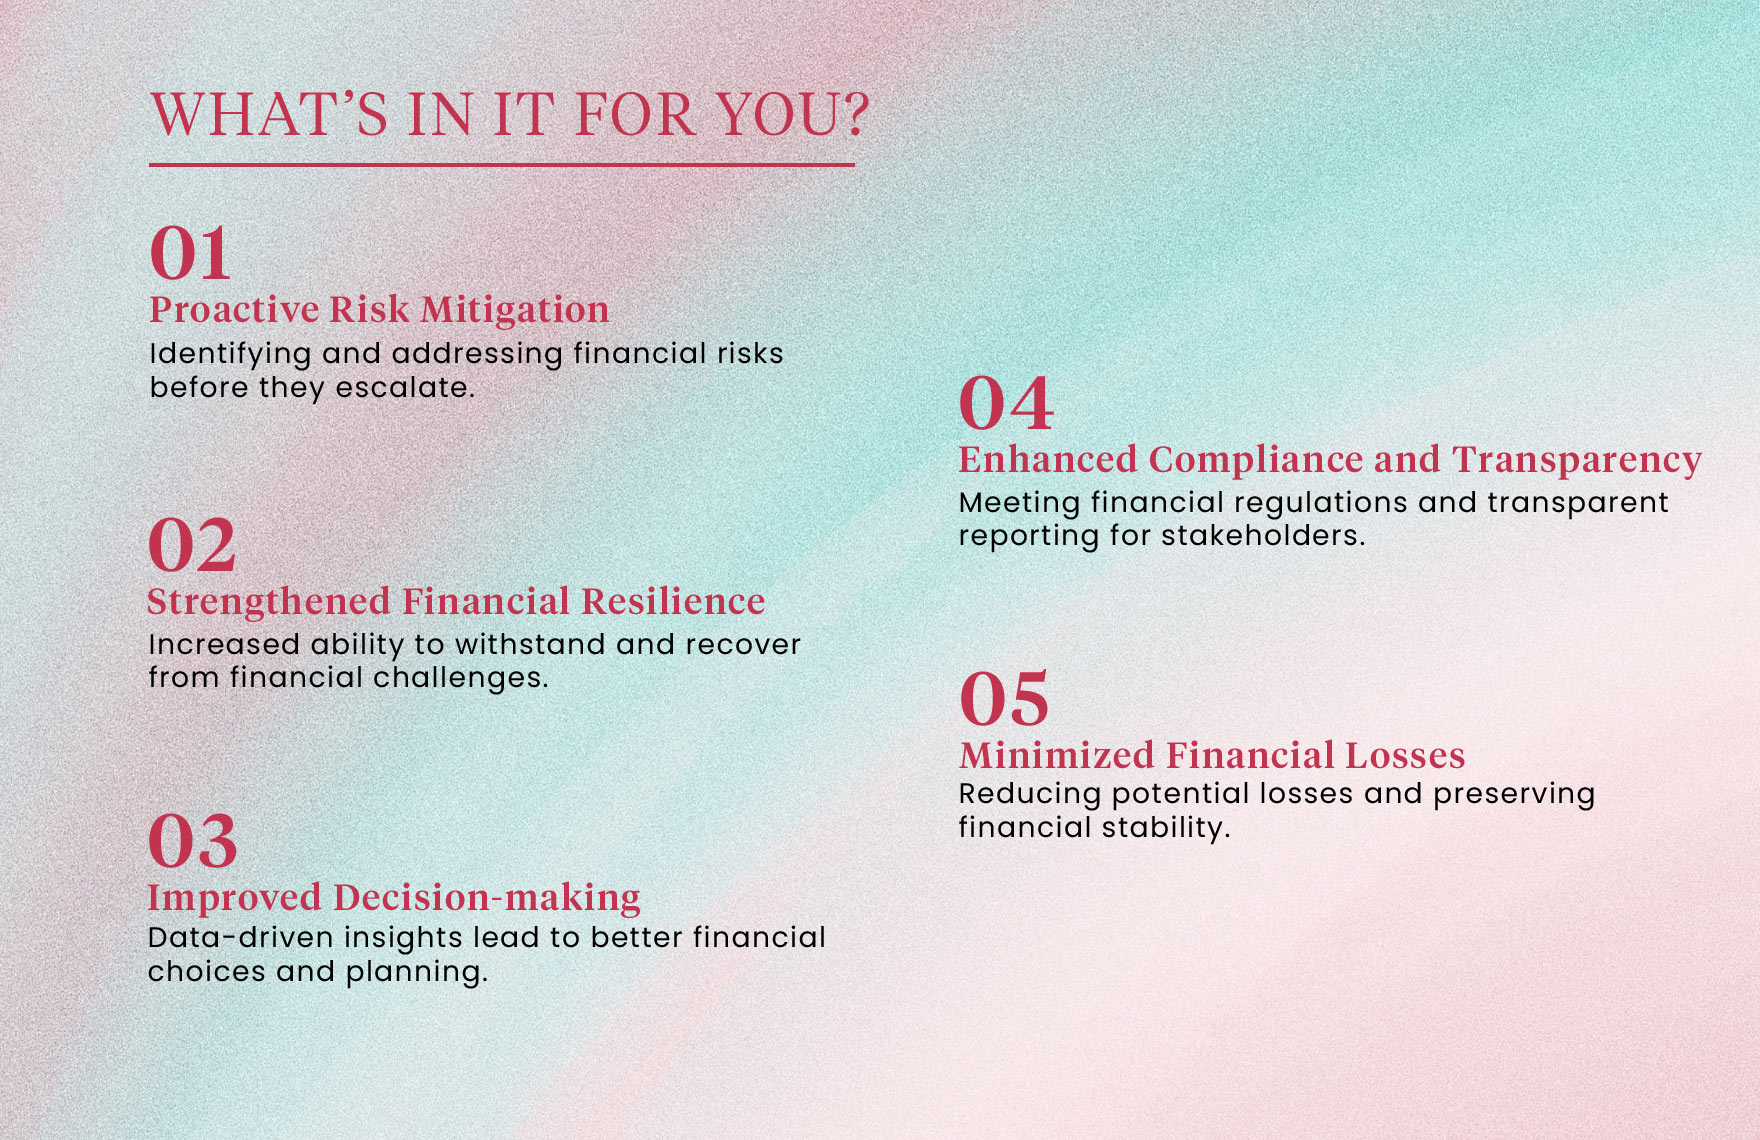 School Financial Controls Checklist Template